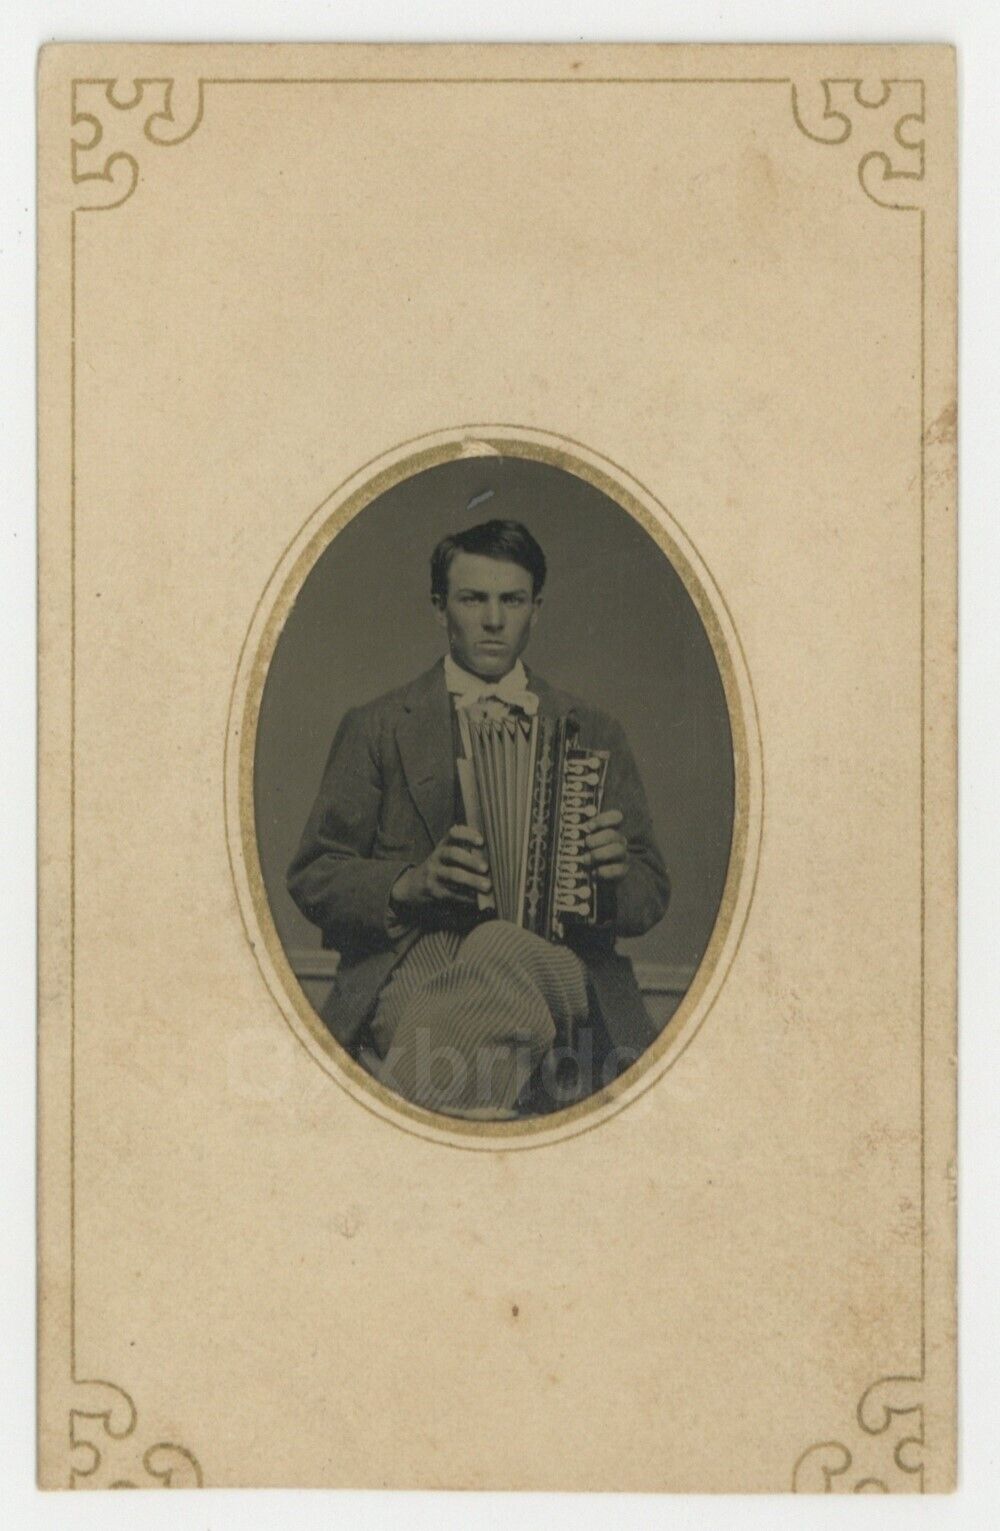 Flutina Musician Tintype 1880 Handsome Man Playing Accordion Music Instrument